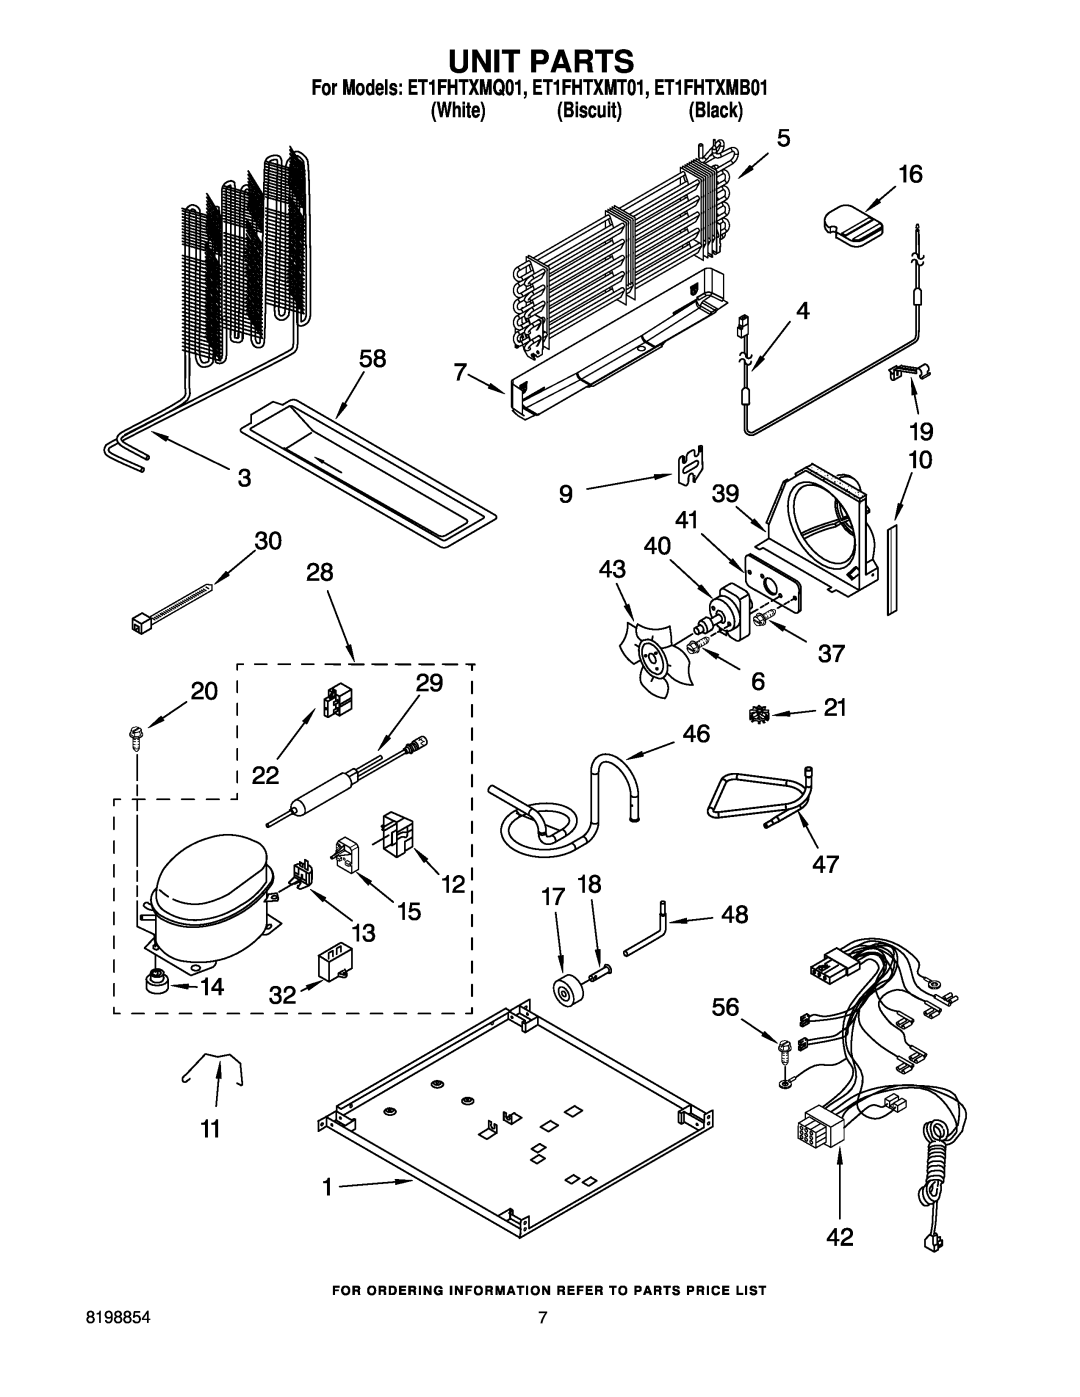 Whirlpool manual Unit Parts, For Models ET1FHTXMQ01, ET1FHTXMT01, ET1FHTXMB01 White Biscuit Black 